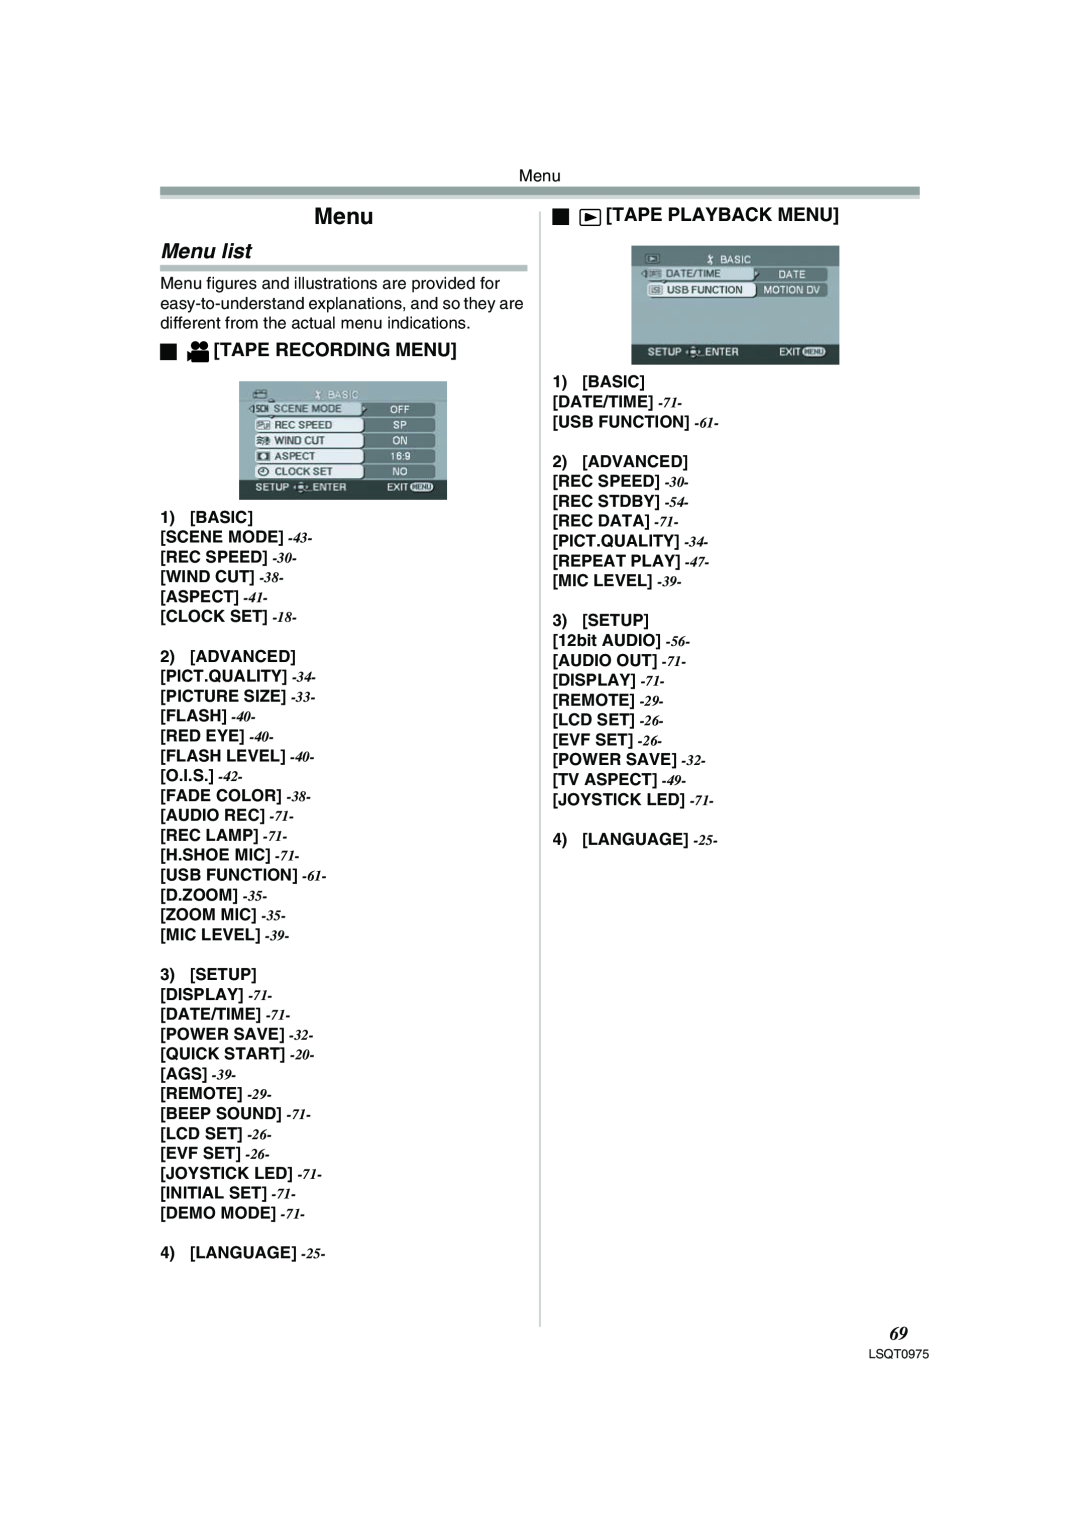 Panasonic PV-GS500 operating instructions Menu list, ª Tape Recording Menu, ª Tape Playback Menu, Language 